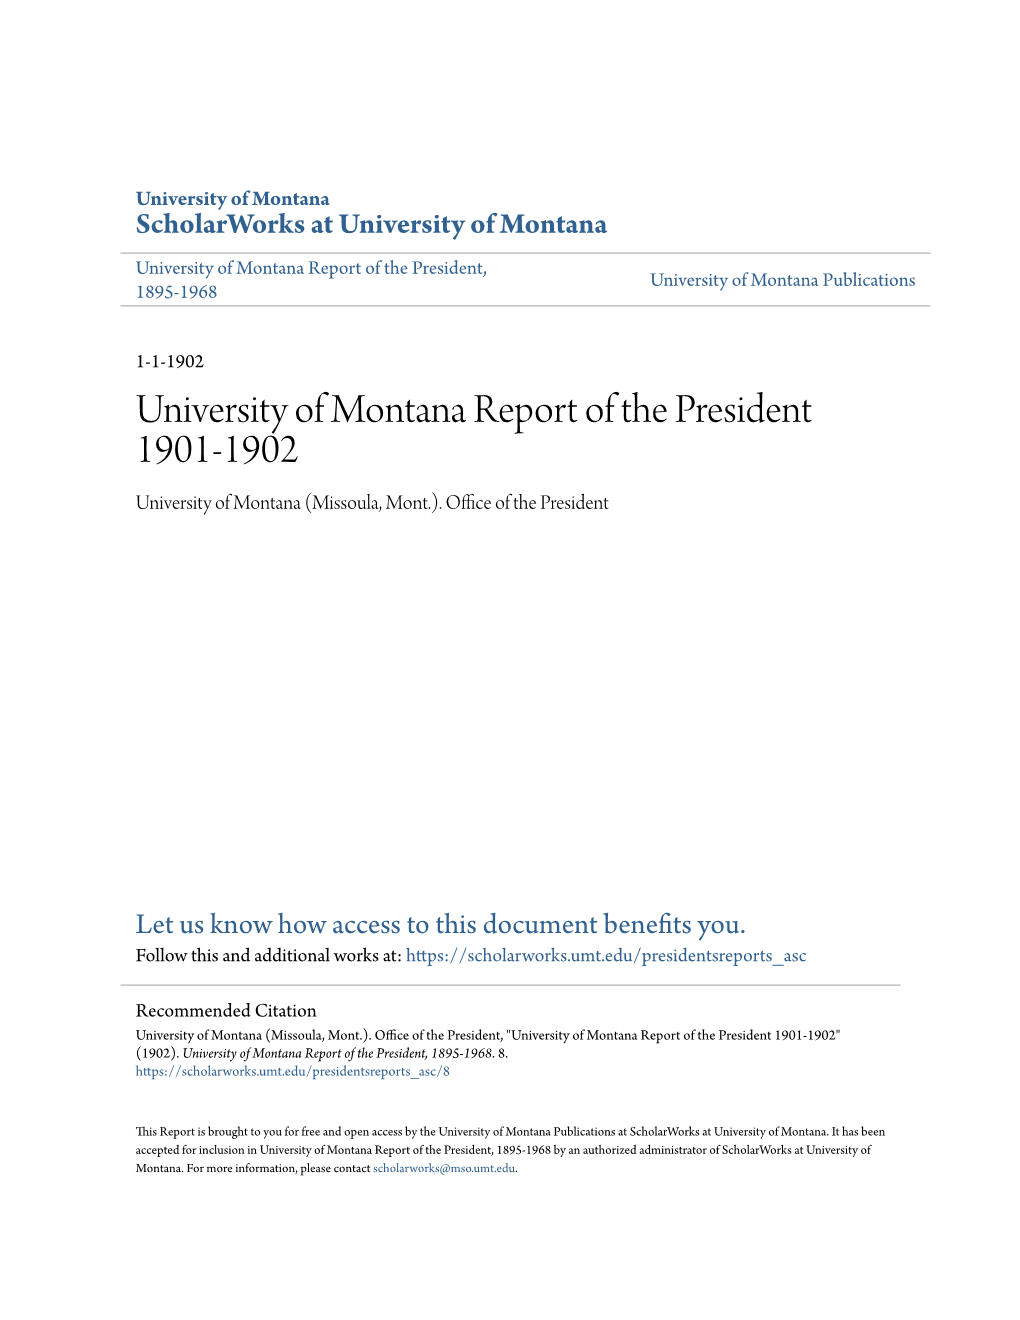 University of Montana Report of the President 1901-1902 University of Montana (Missoula, Mont.)